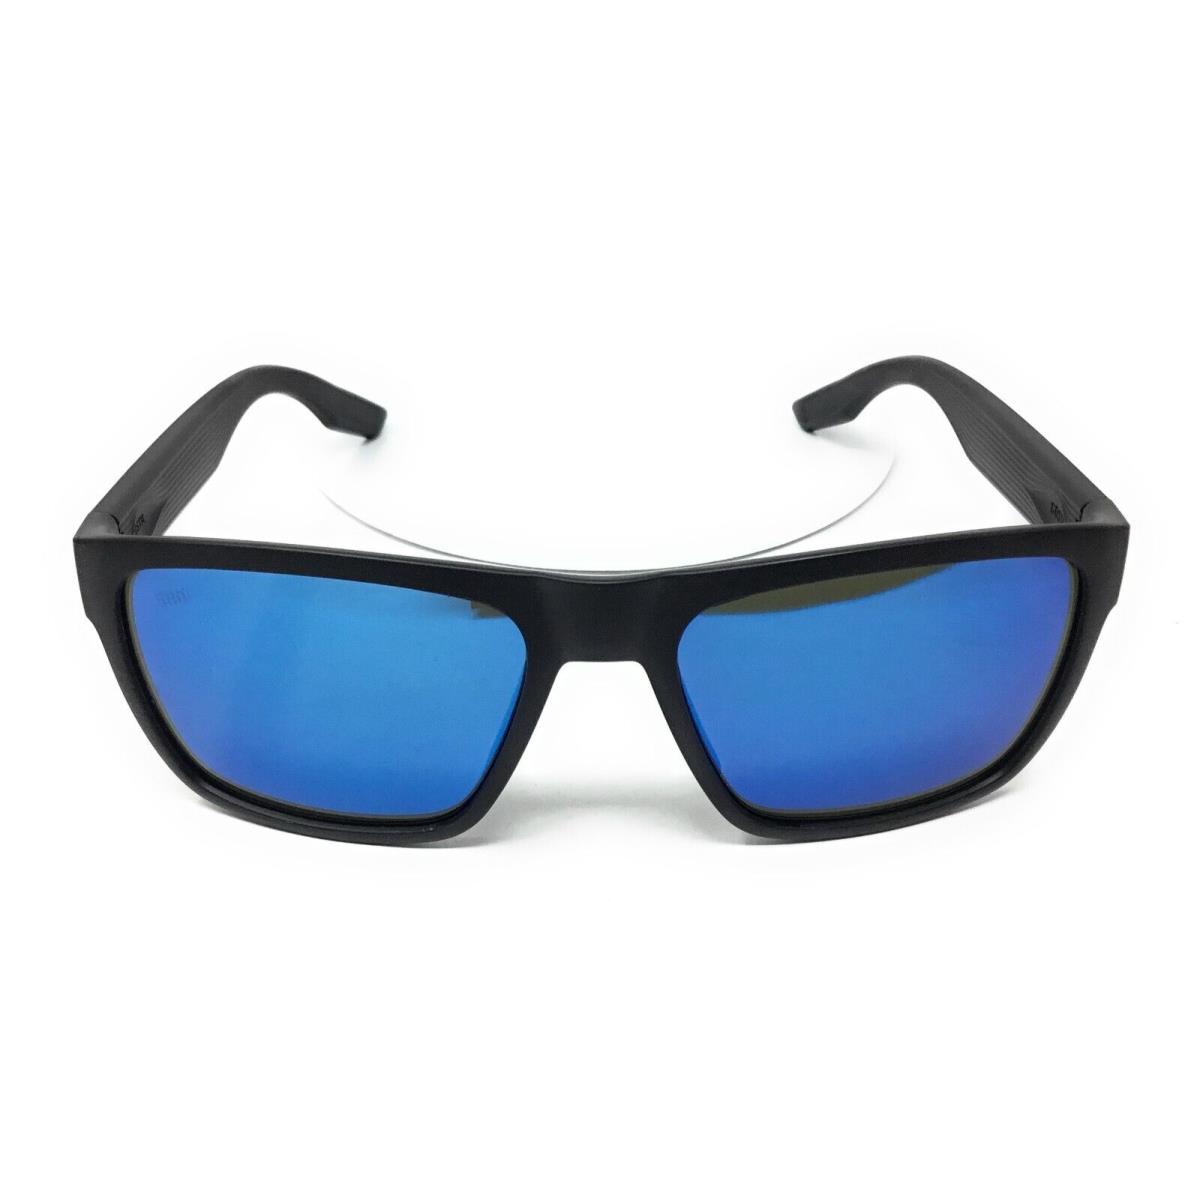 Costa Del Mar Paunch Xl Men`s Blue Mirror Polarized Sunglasses 6S9050 905001 59 - Frame: Black, Lens: Blue